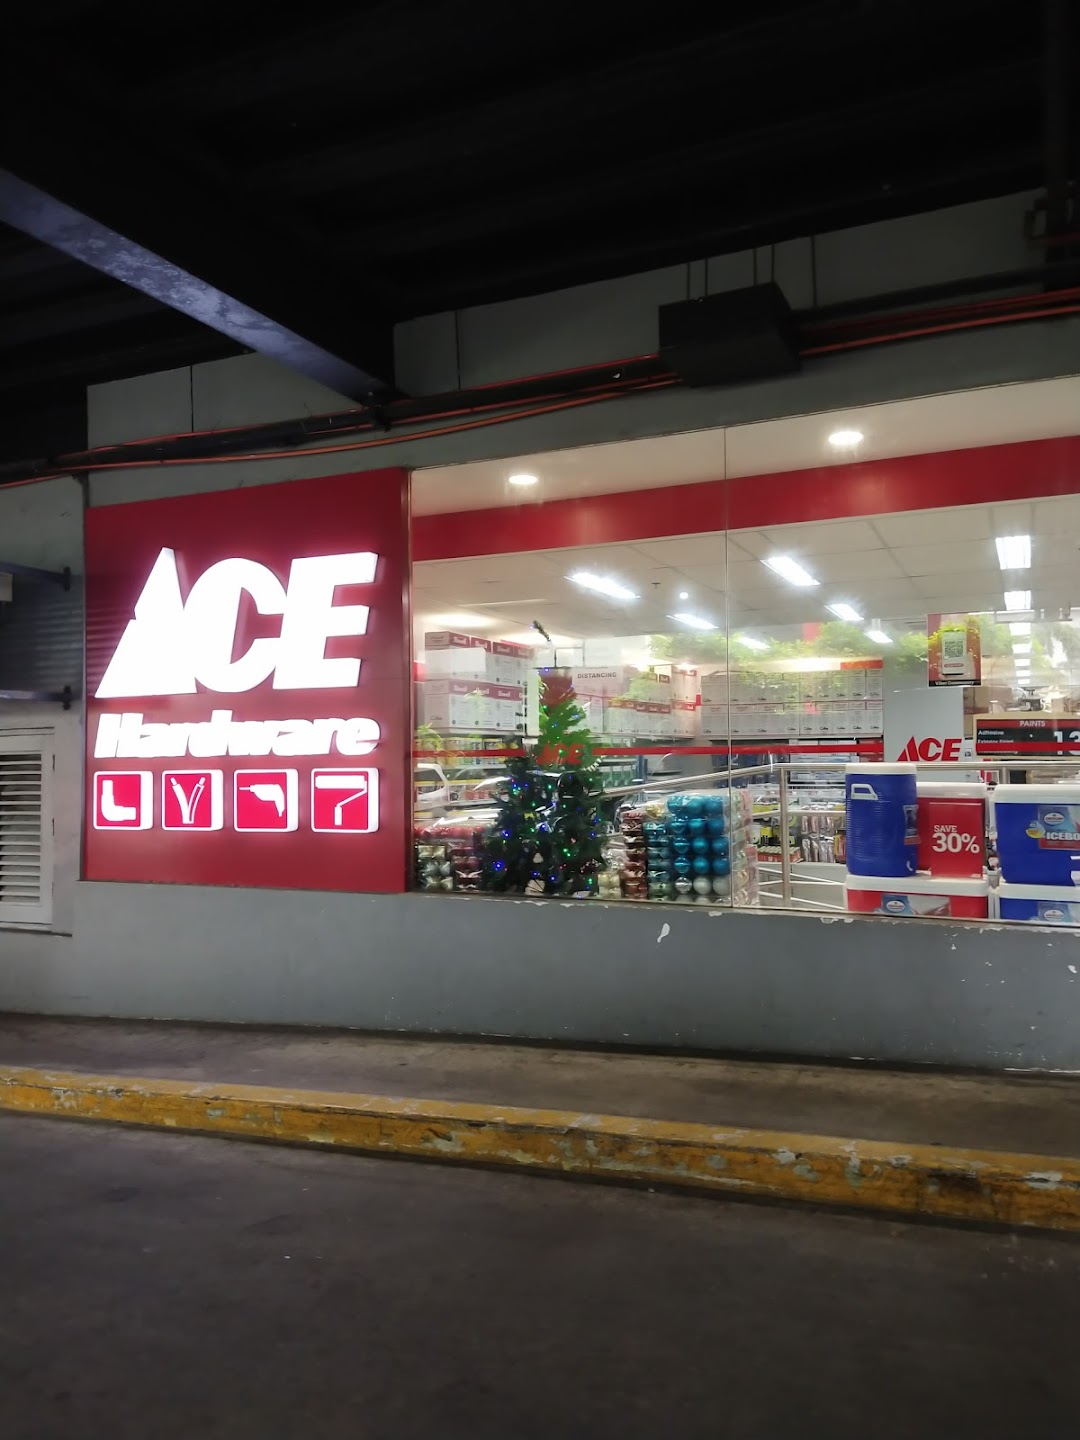 Ace Hardware Shopking Don Antonio